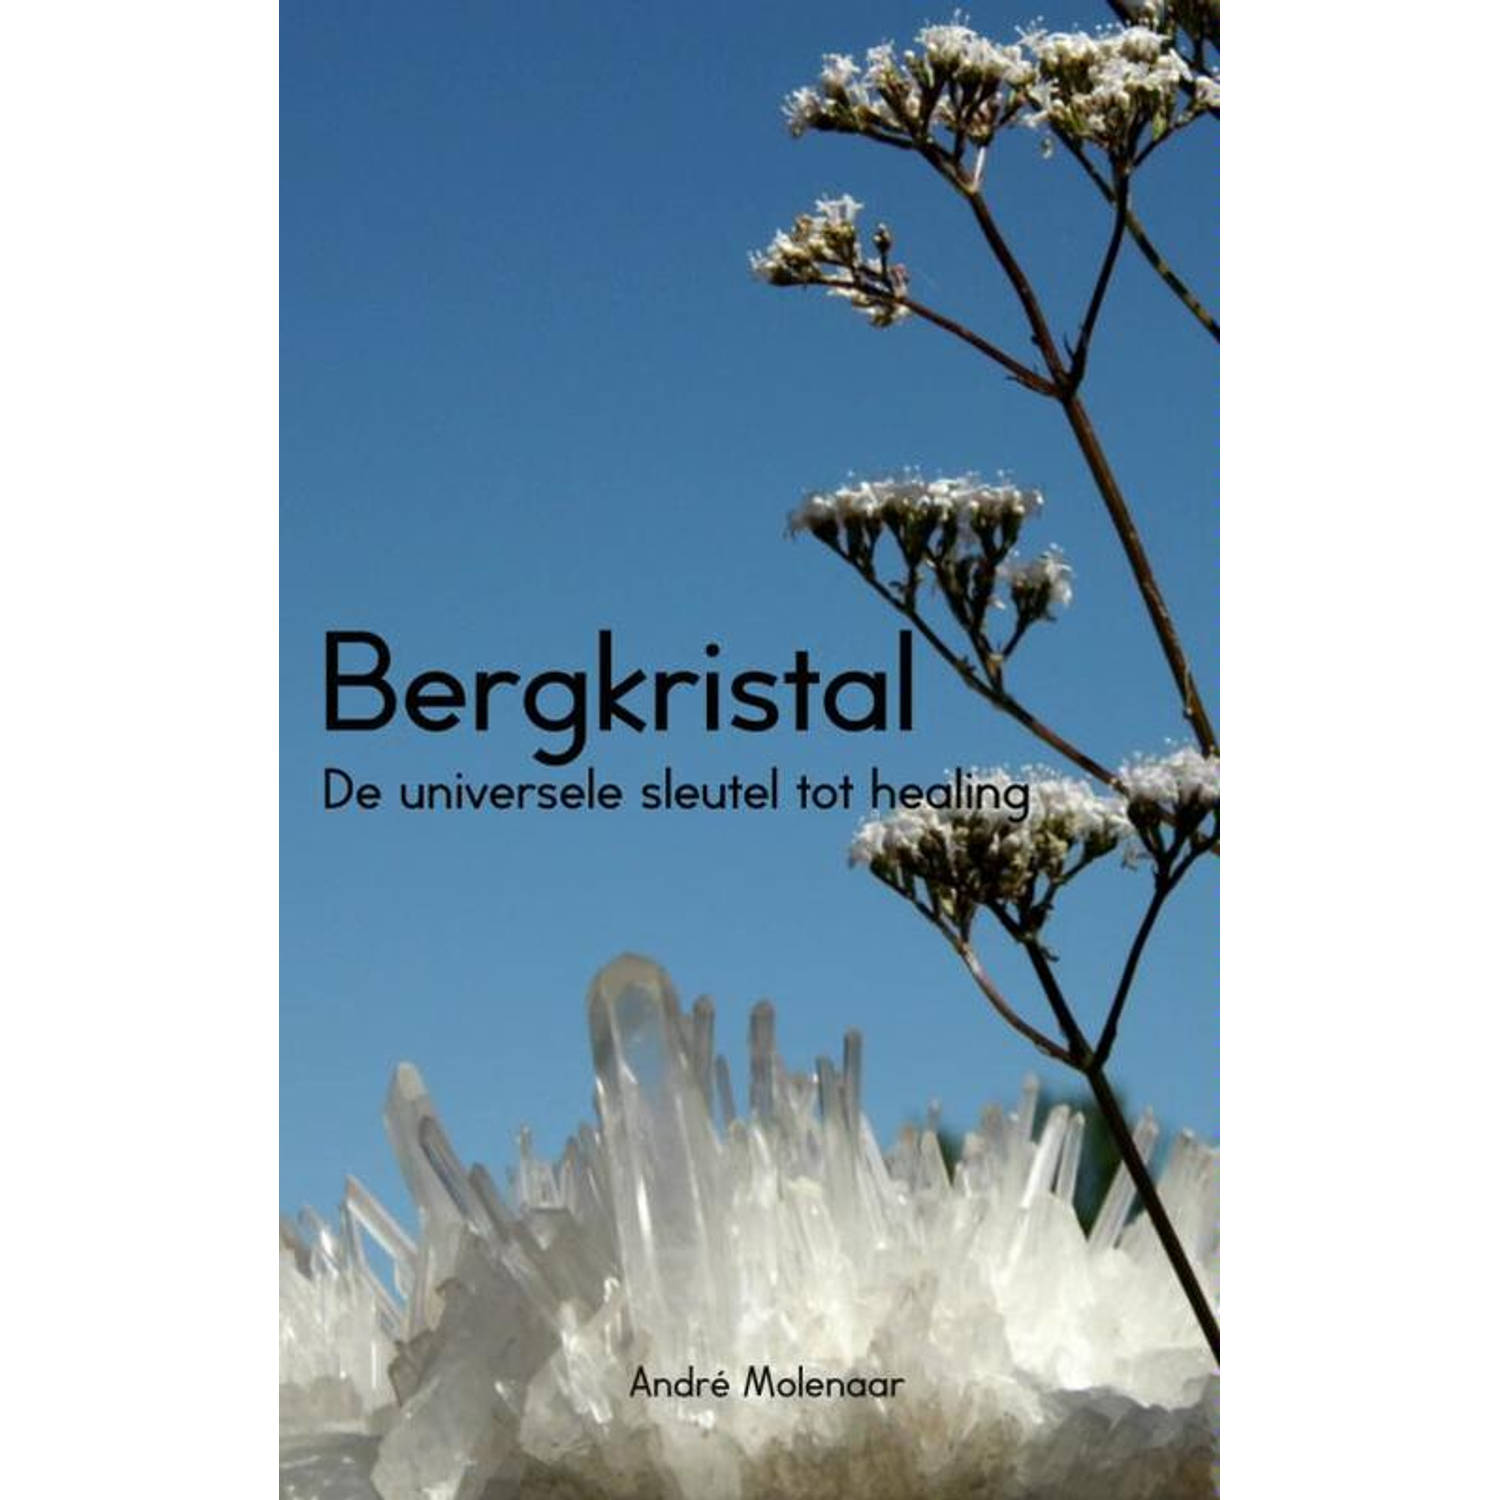 Bergkristal. de universele sleutel tot healing, Andre Molenaar, Paperback